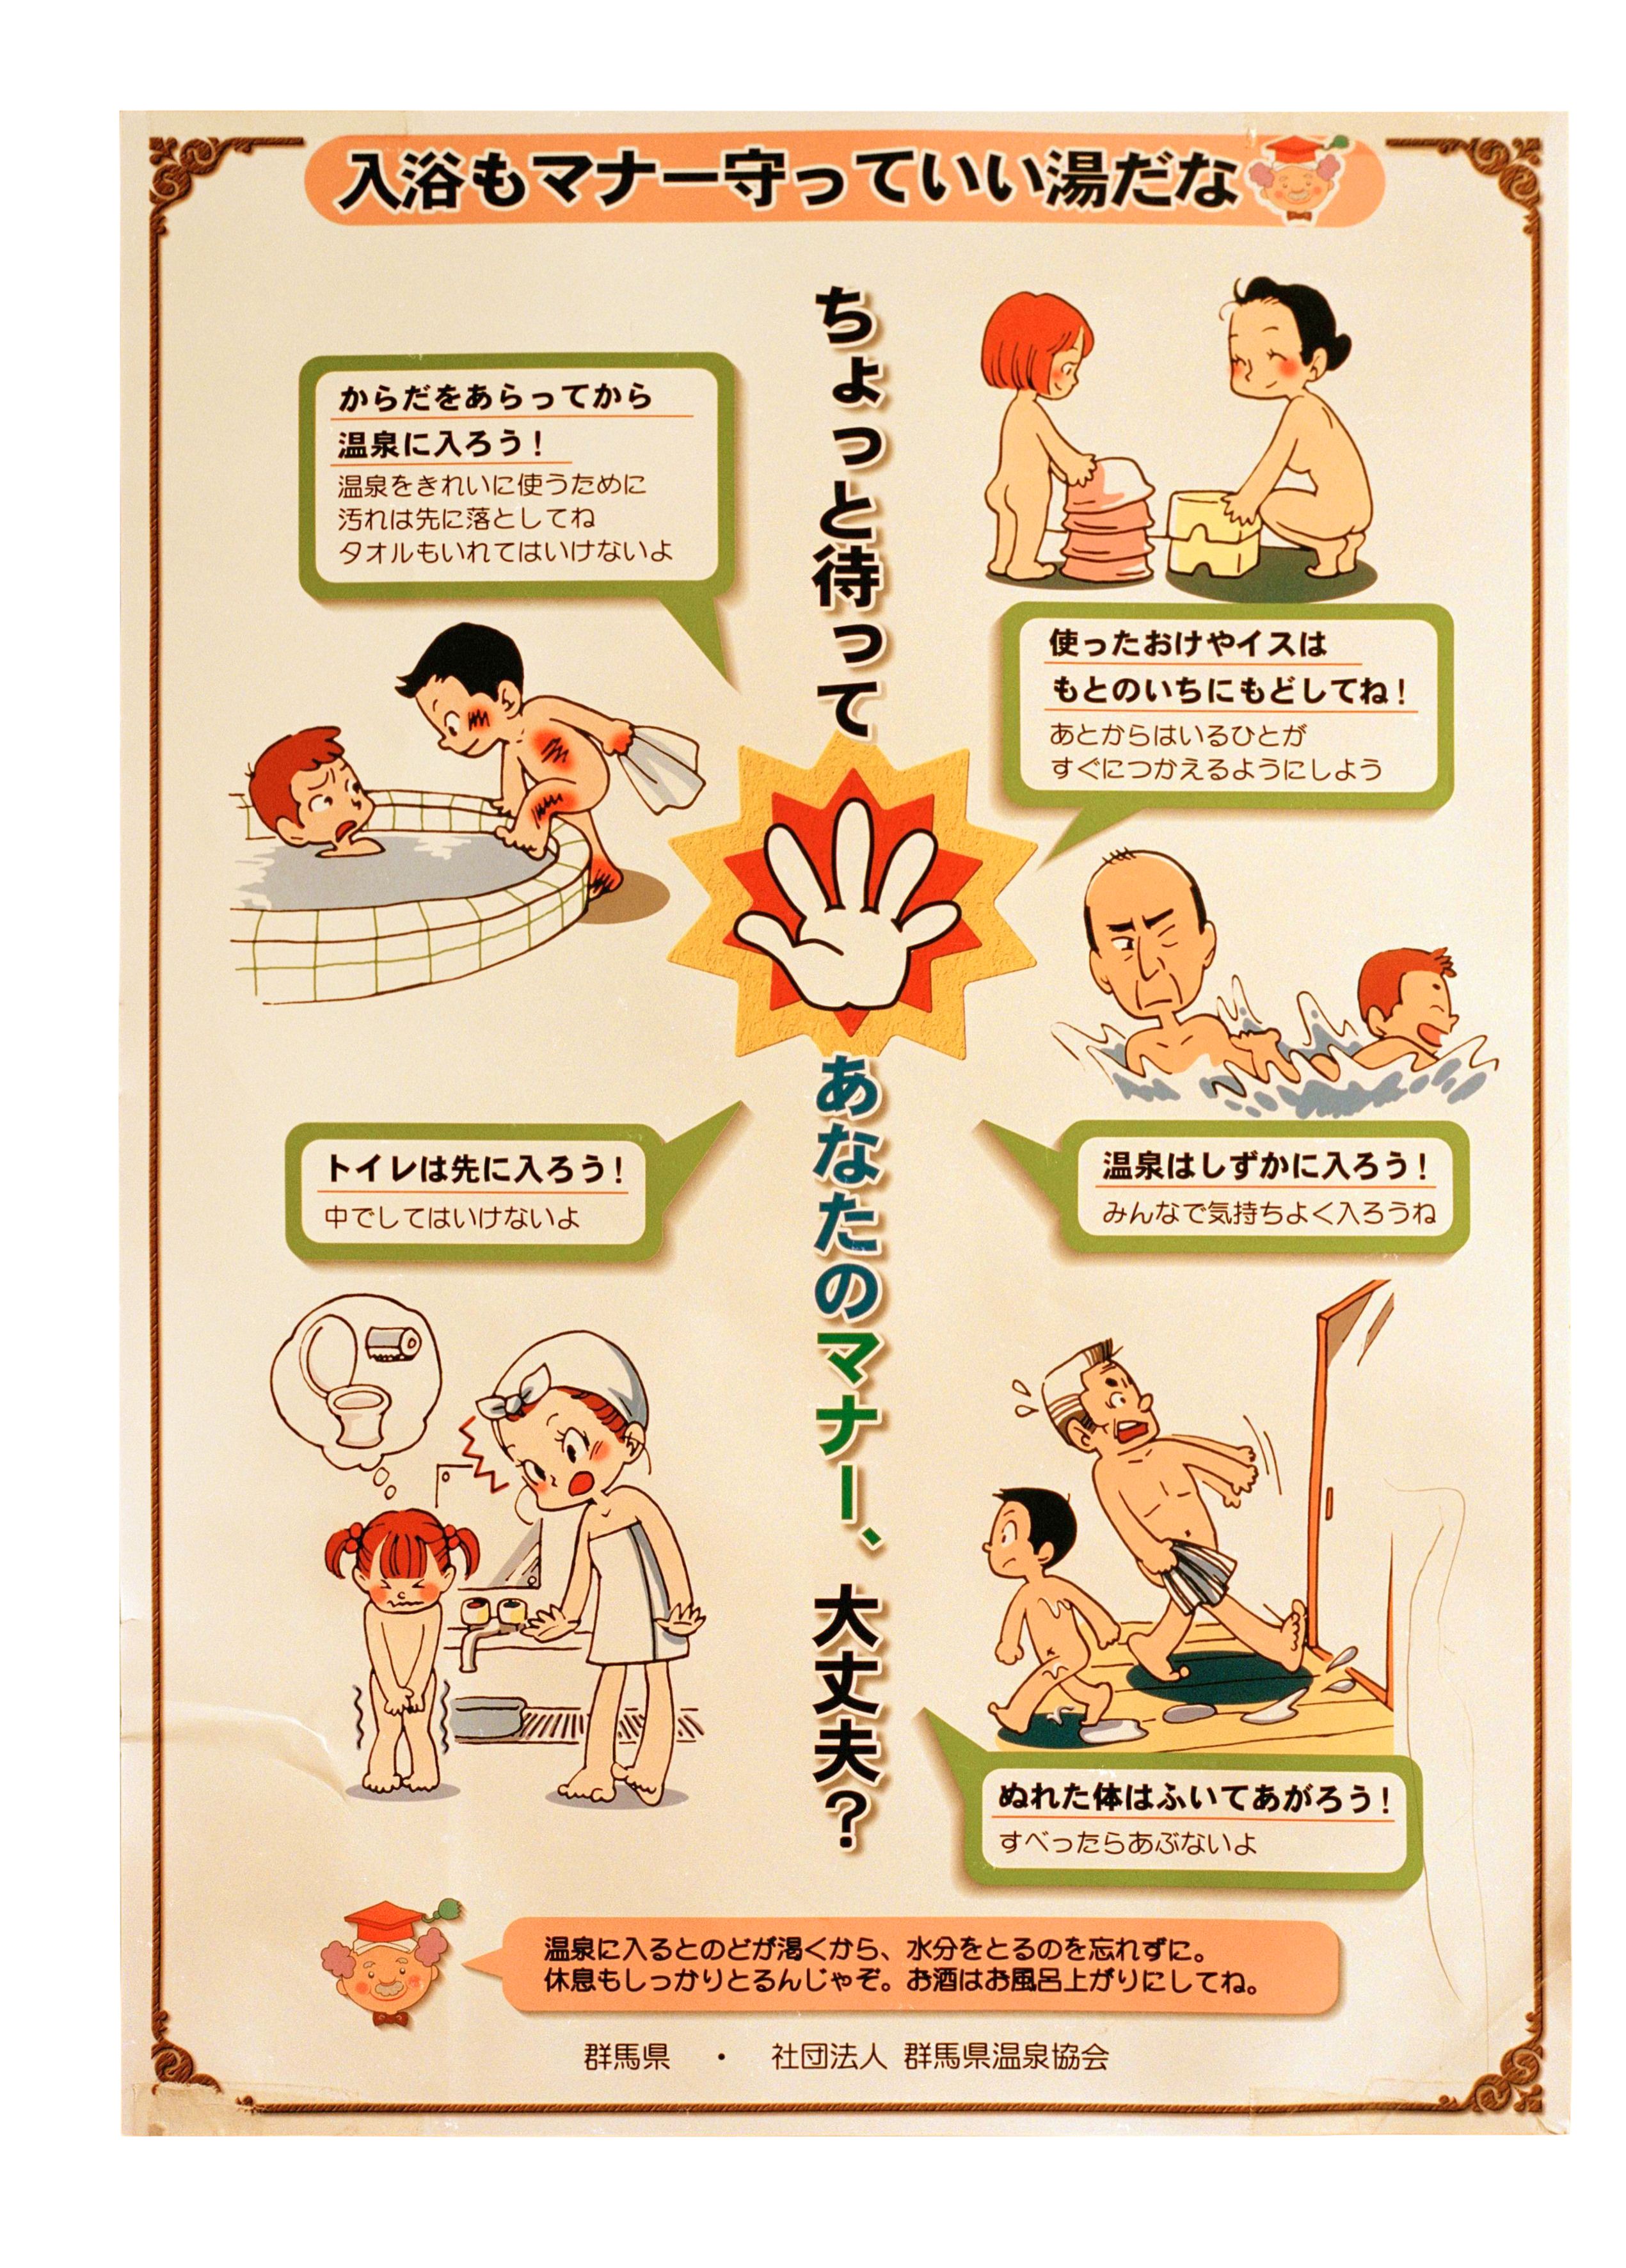 Japanese Onsen Etiquette - Taking a Bath in Japan